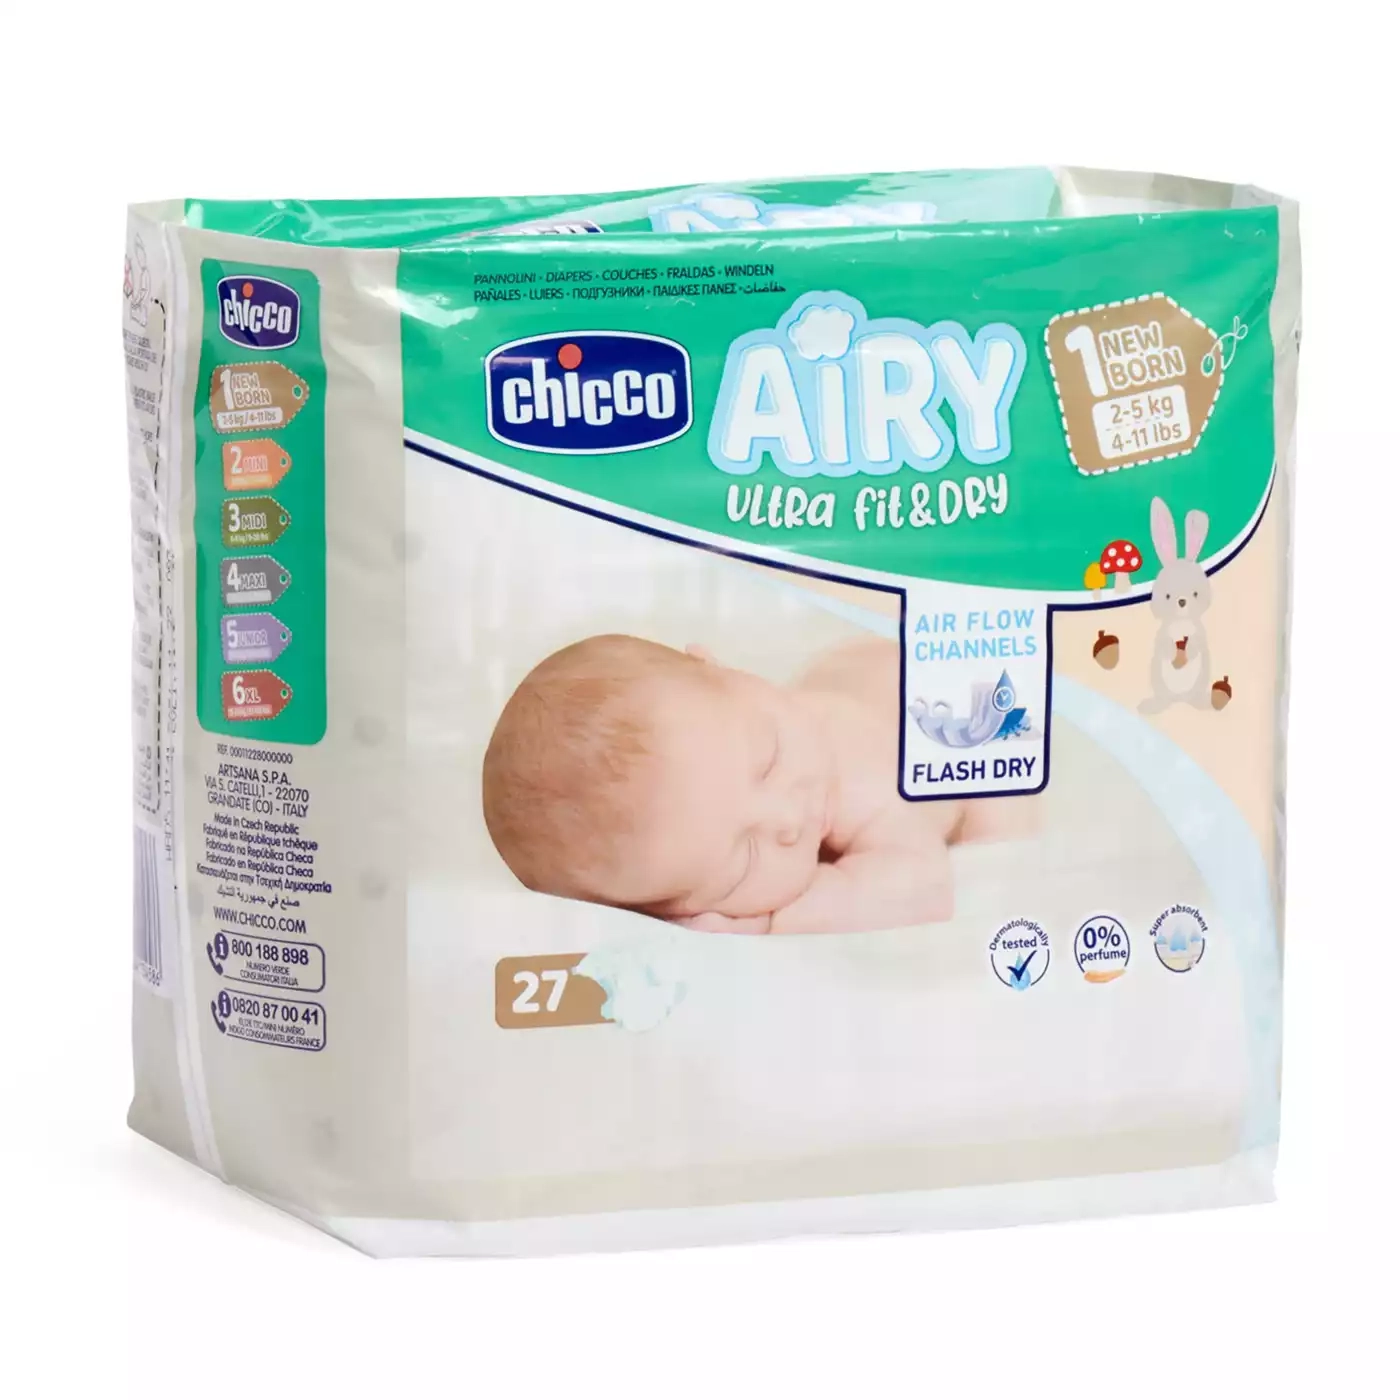 Airy Ultra Fit&Dry Newborn 27x6 chicco 2000582844106 1